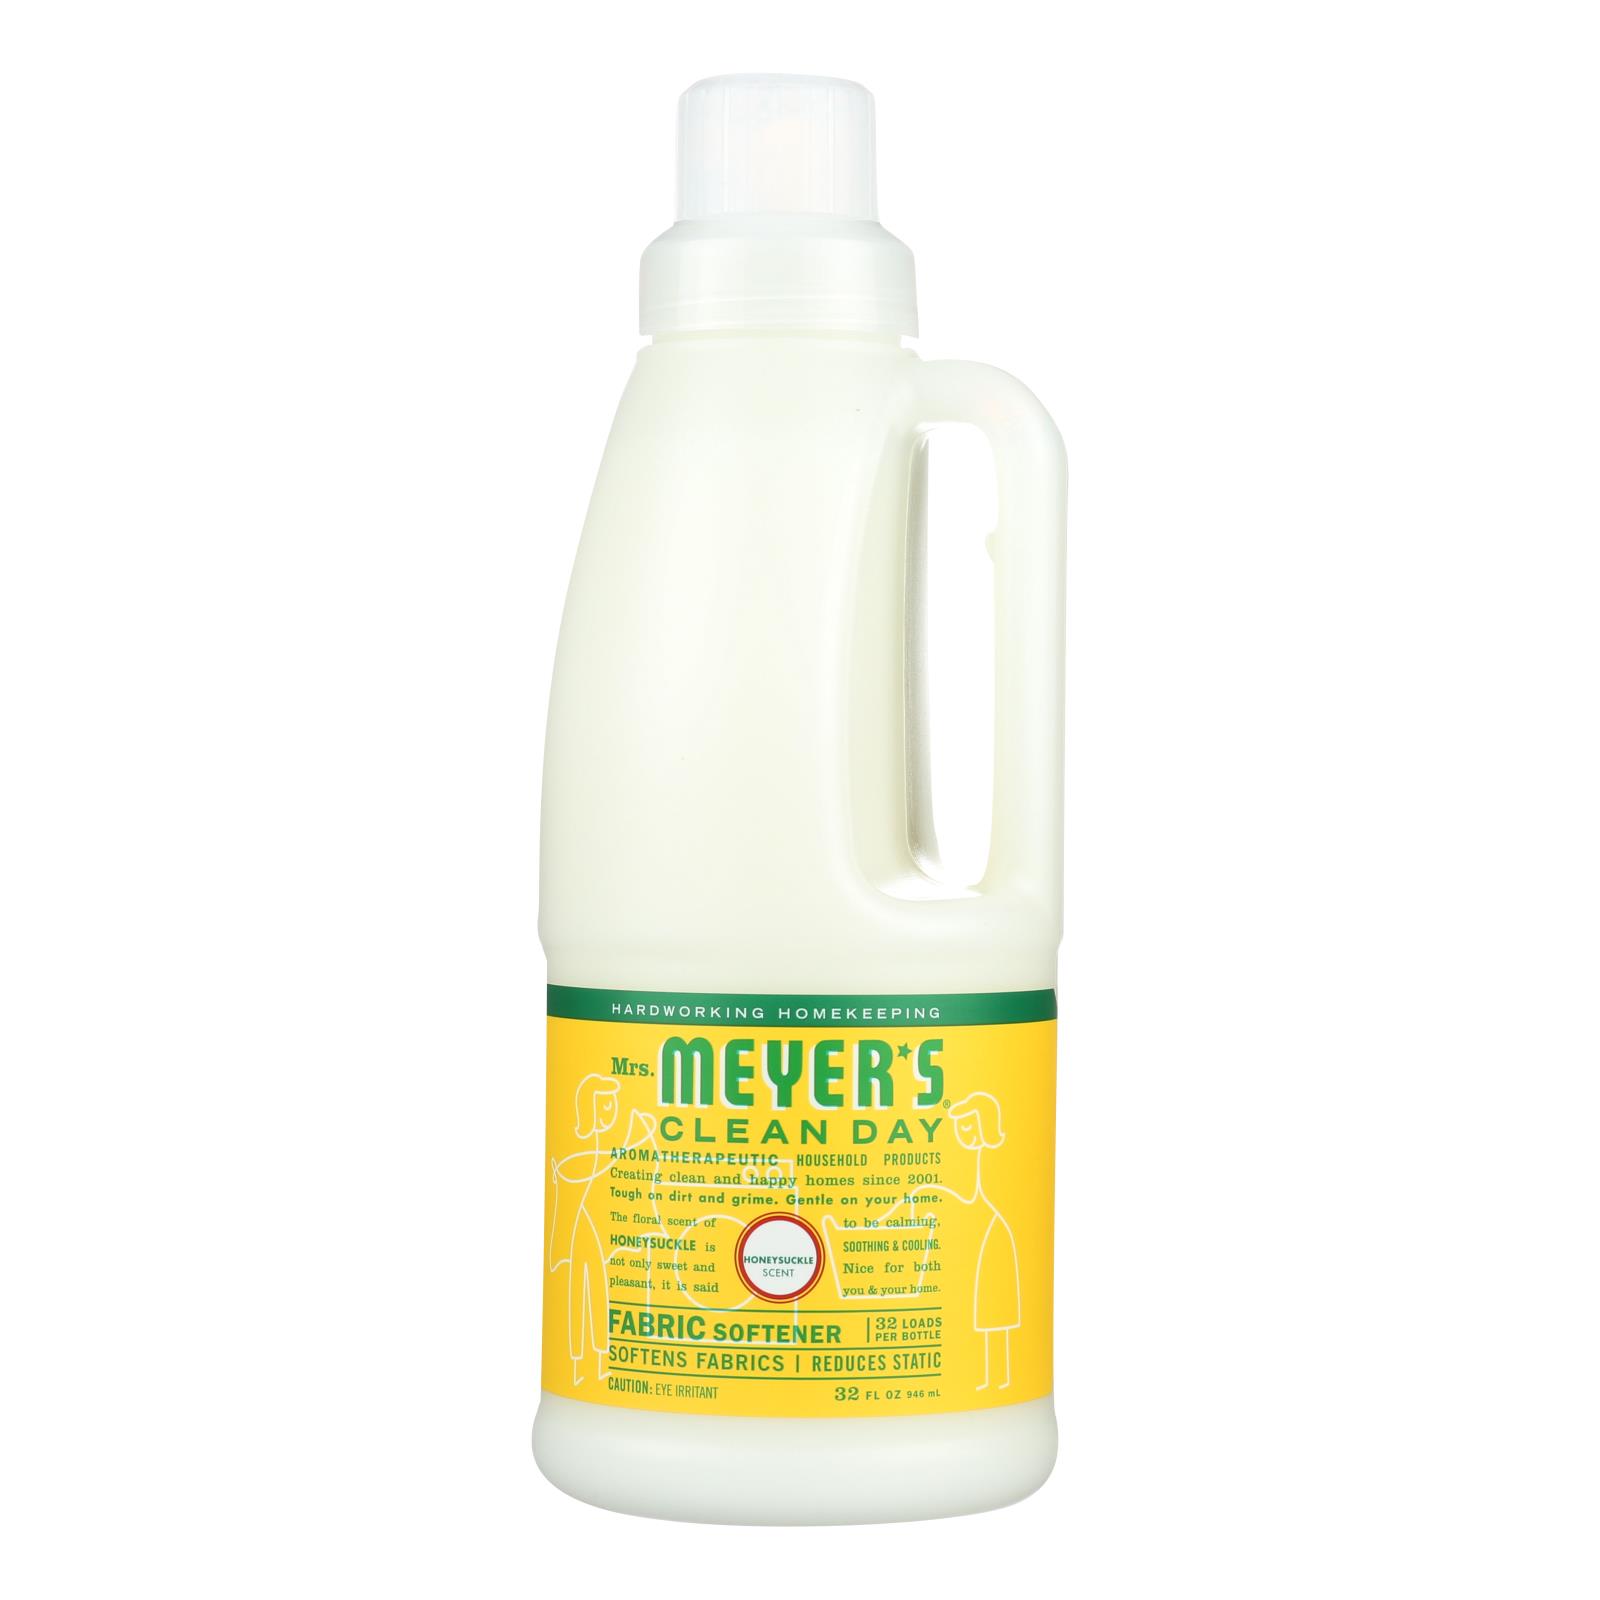 Mrs. Meyer's Clean Day - Fabric Softener - Honey - 6개 묶음상품 - 32 Fl oz.